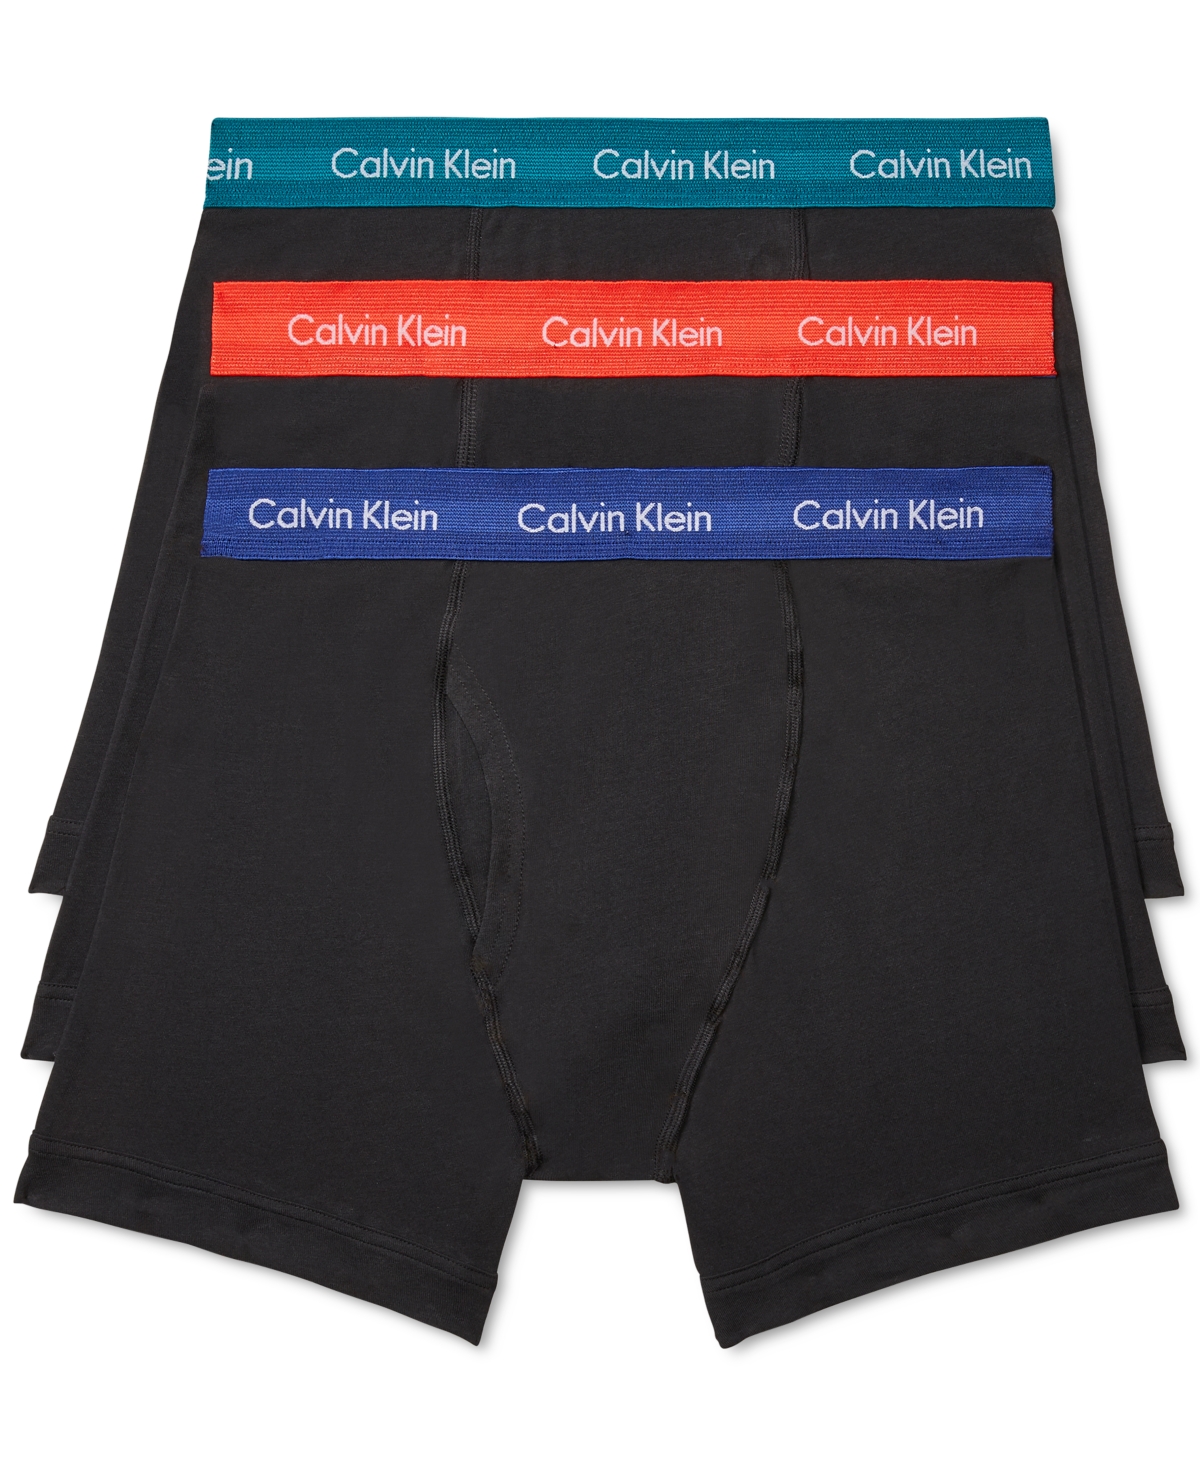 UPC 790812736227 product image for Calvin Klein Men's 3-Pk. Stretch Moisture-Wicking Boxer Briefs | upcitemdb.com